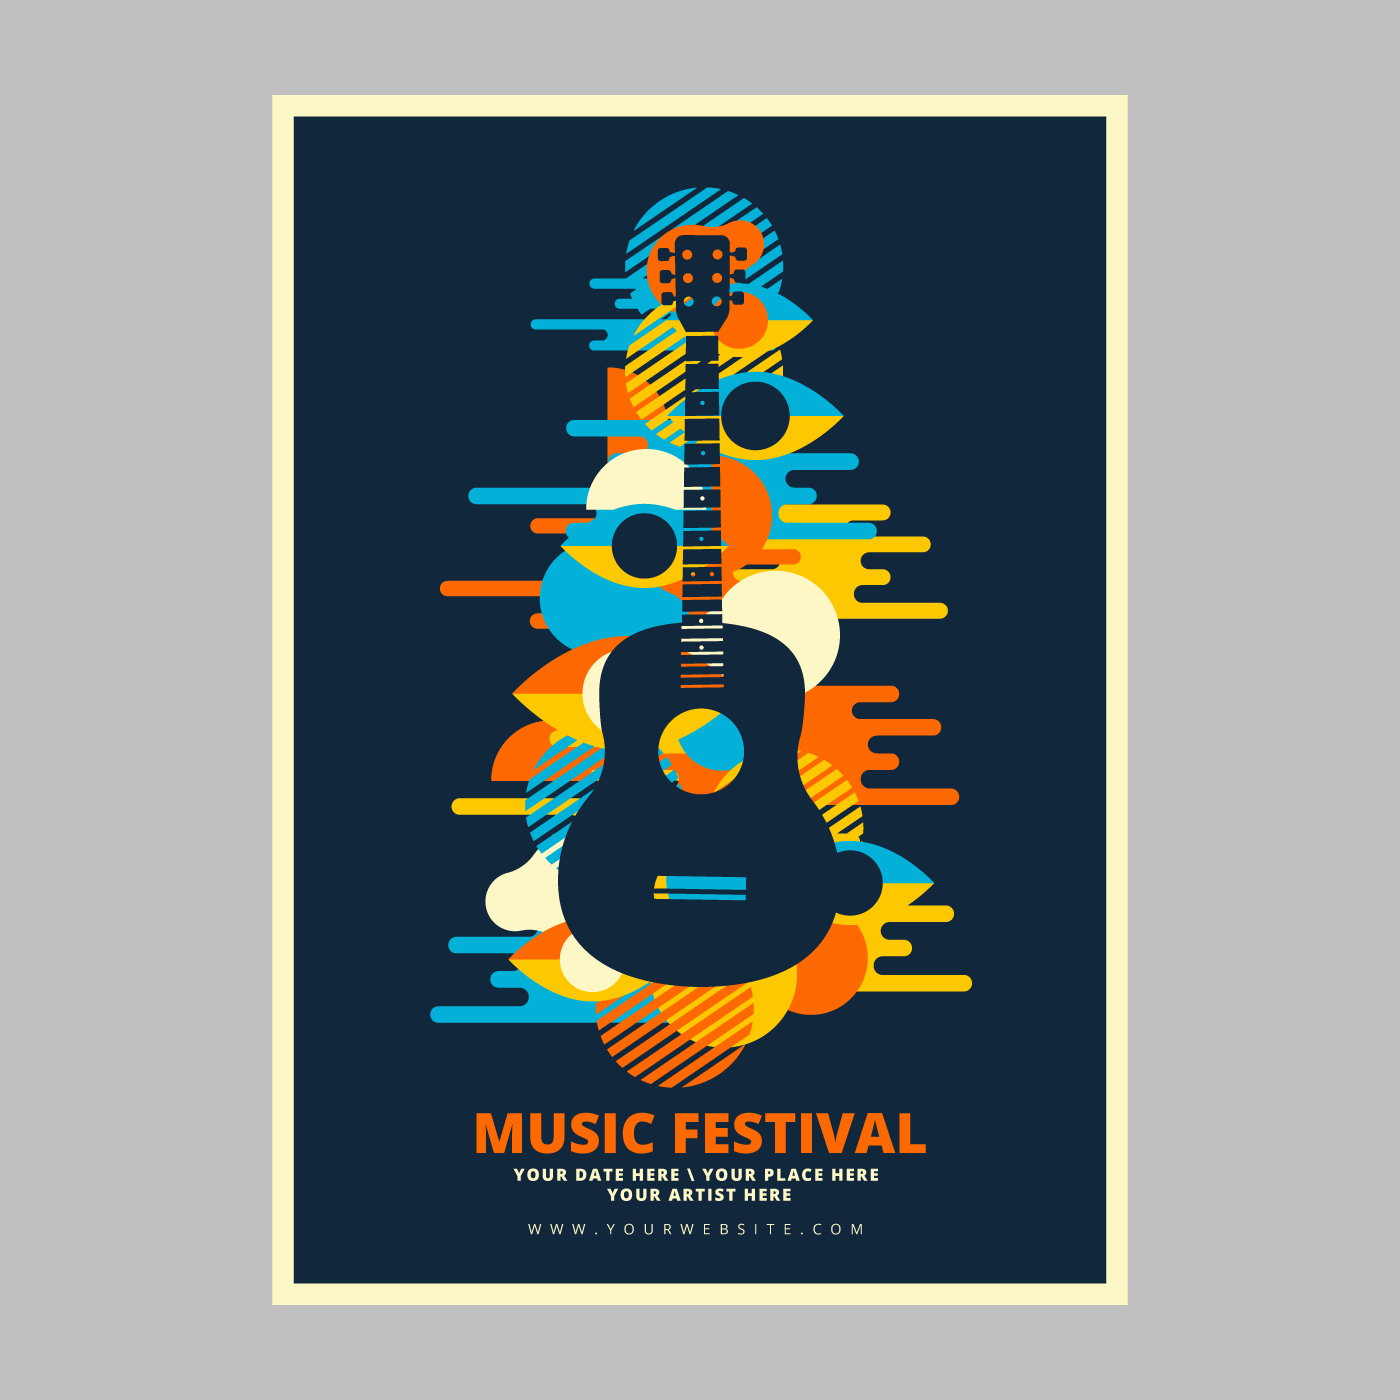 Music poster. Музыкальный плакат. Музыкальный фестиваль плакат. Постер музыка. Музыкальные плакаты современные.